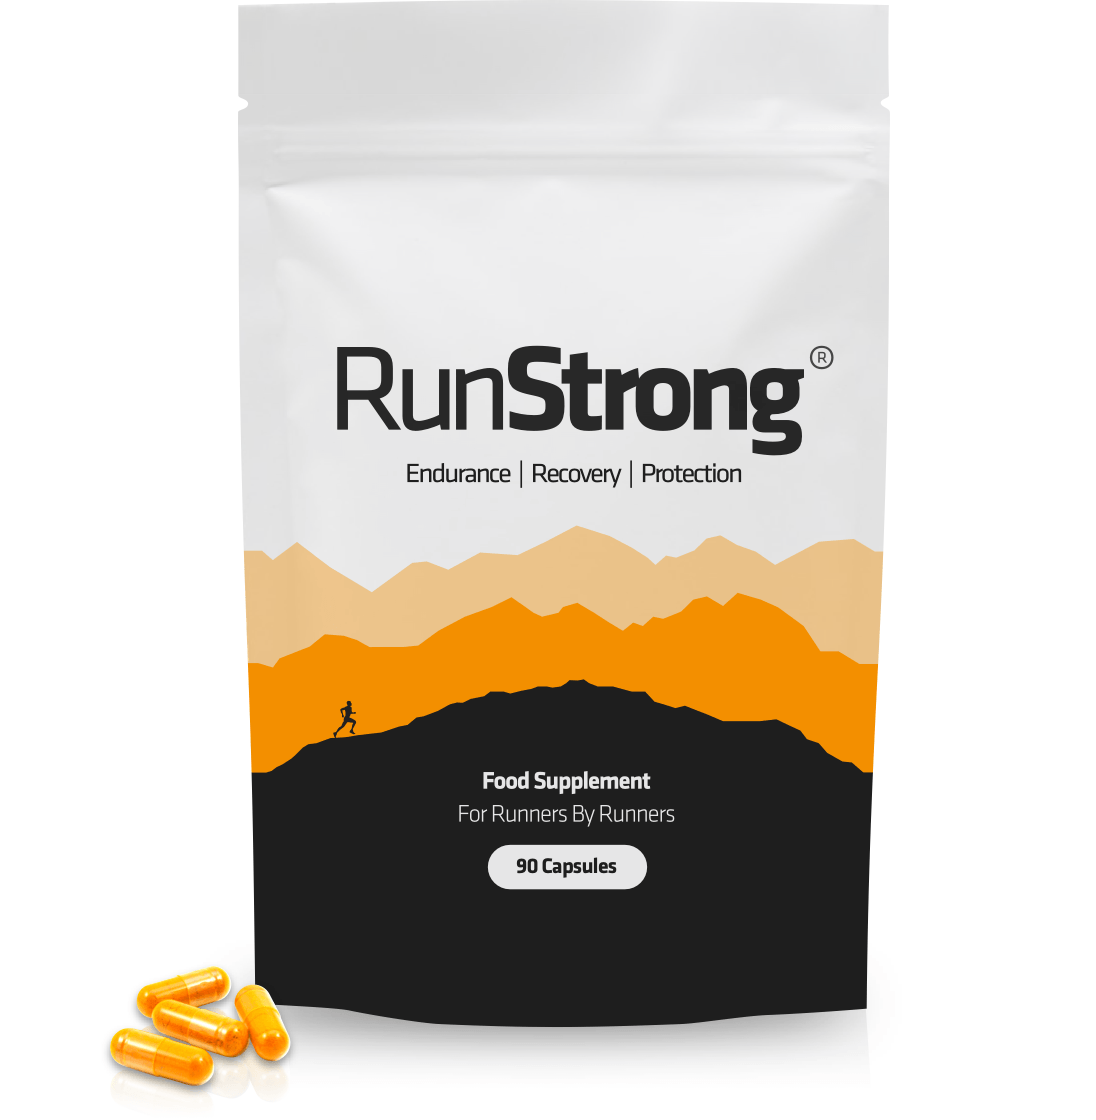 RunStrong Daily Supplement for Runners